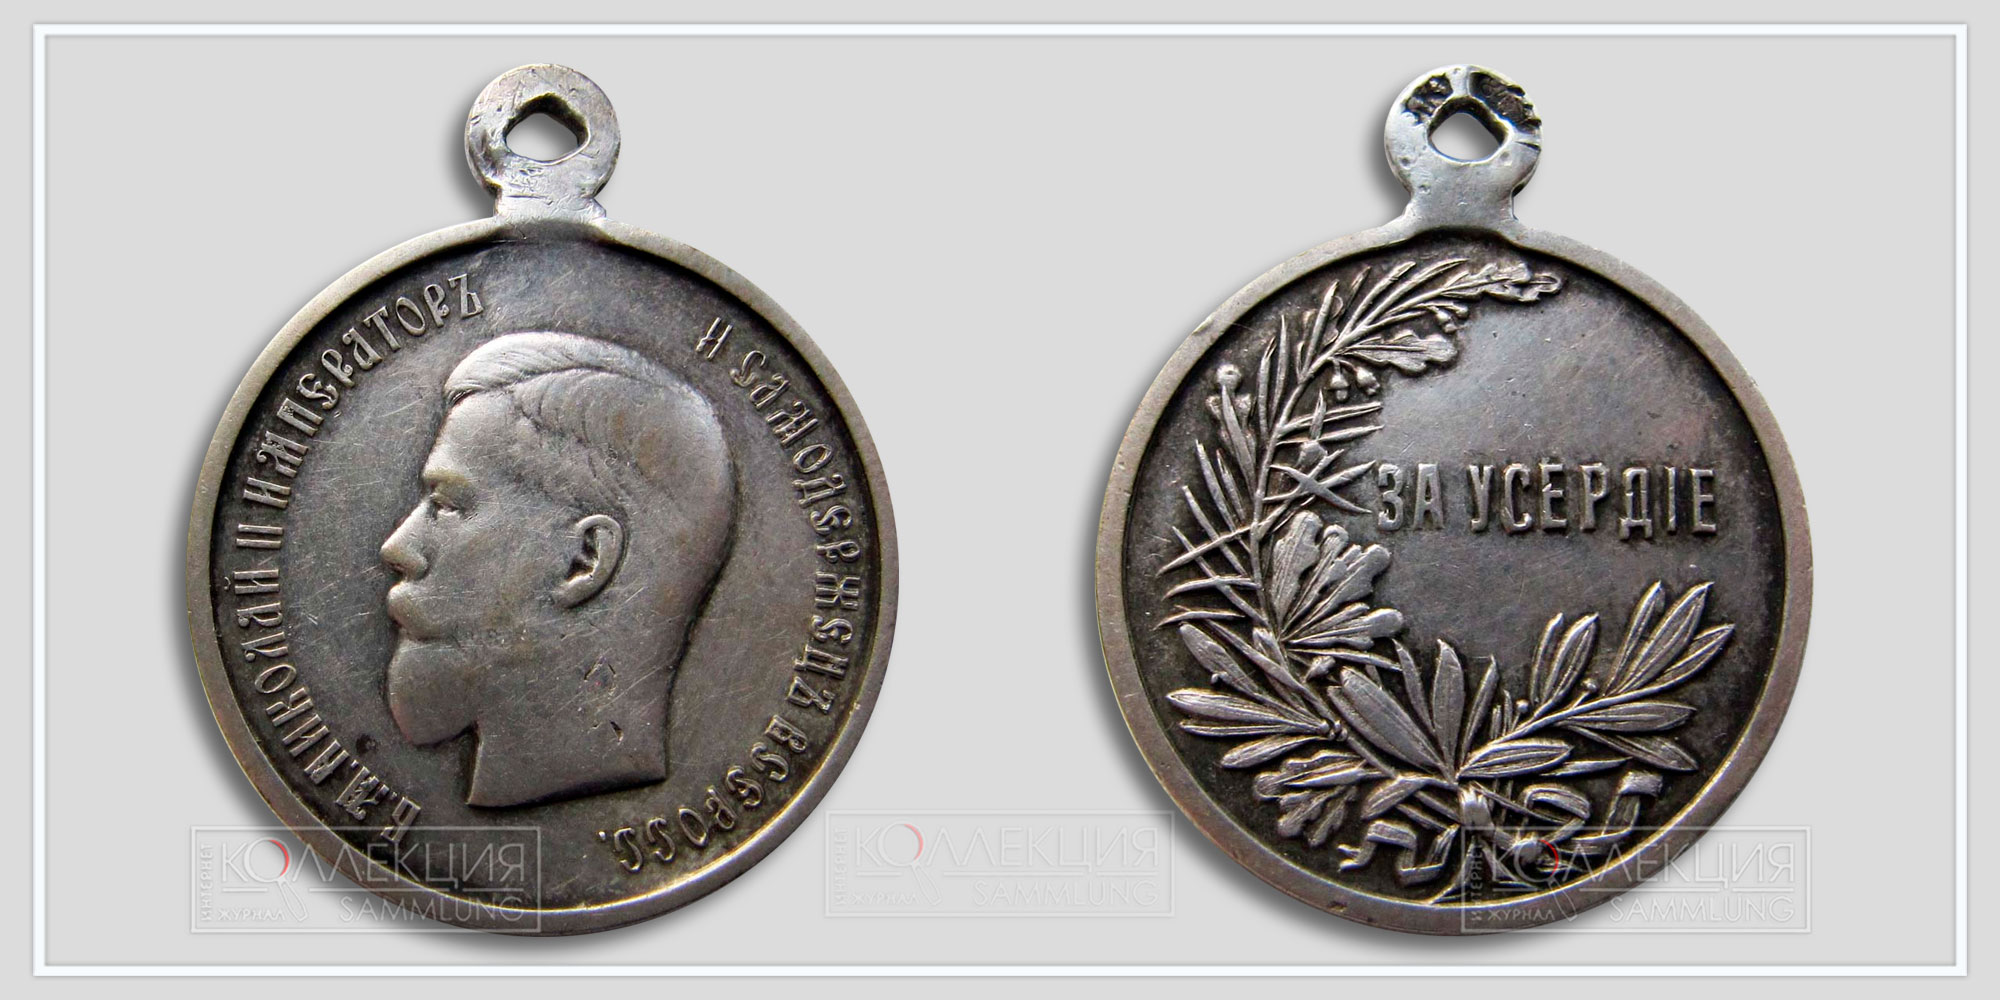 Медаль "За усердие" Николай II Серебро Диаметр 27,9 мм Вес 9,2 г (Из архива Фалеристика.инфо Разместил коллега Сибирякъ)